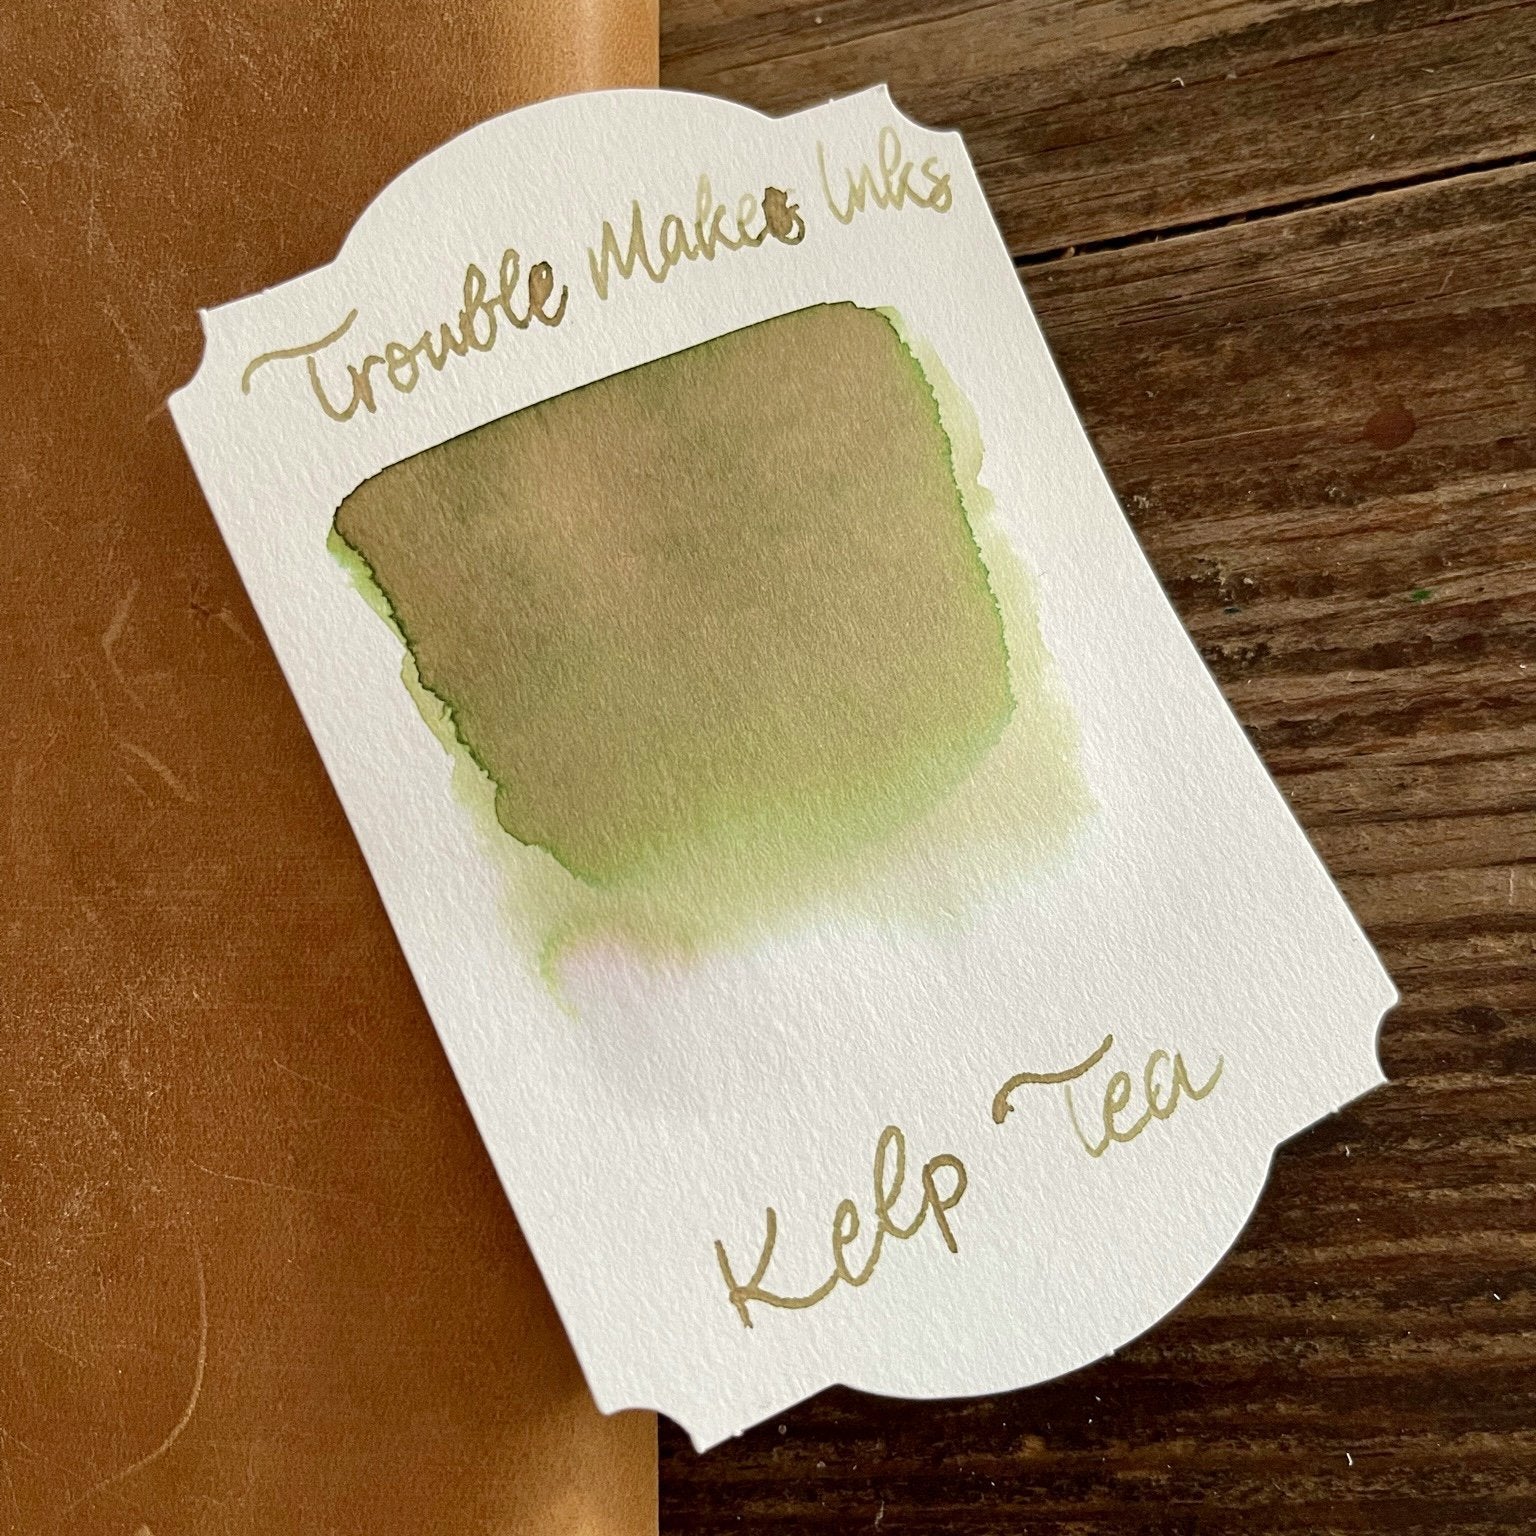 Troublemaker Kelp Tea Mürekkep 60 ml